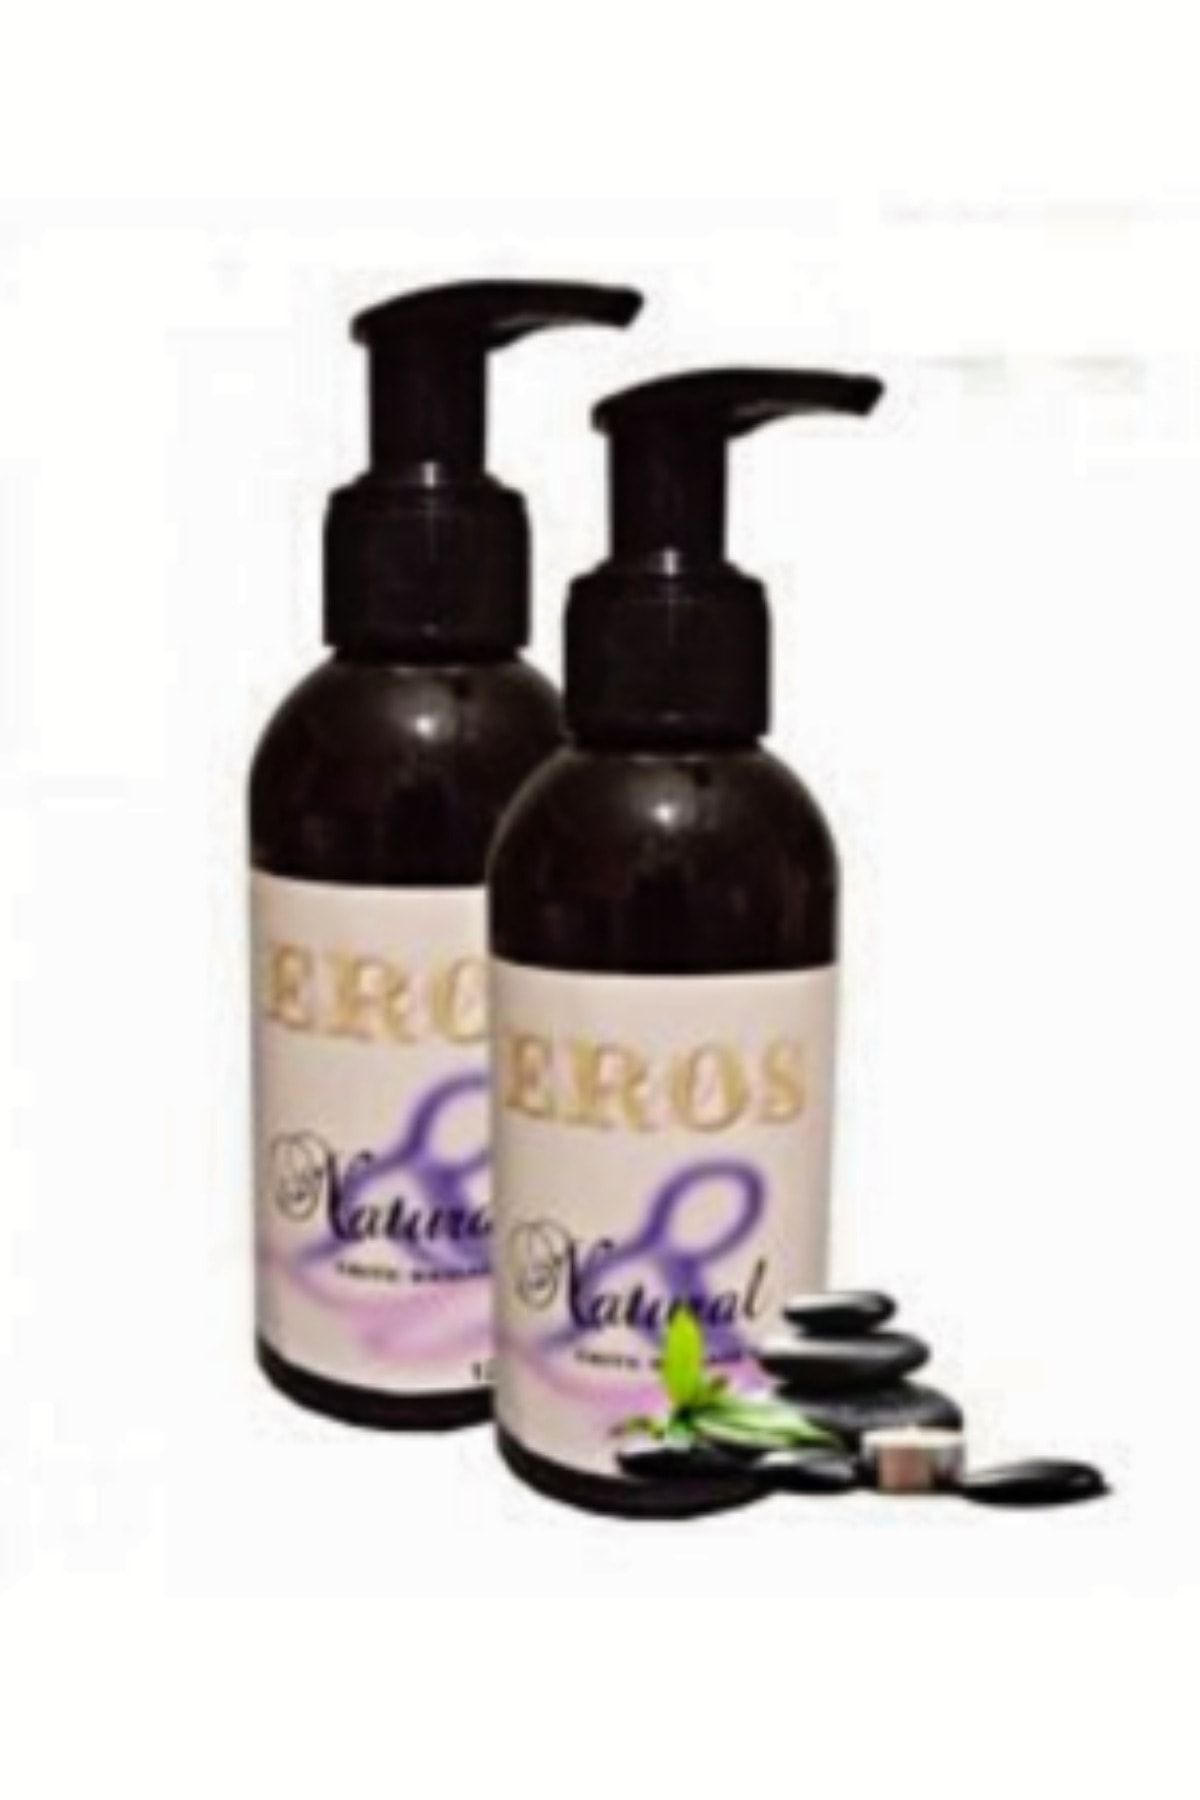 Eros Hologramlı Natural Aromaterapi Massage Oil 120 Ml Kokusuz Erotik Masaj Yağı 2 Adet